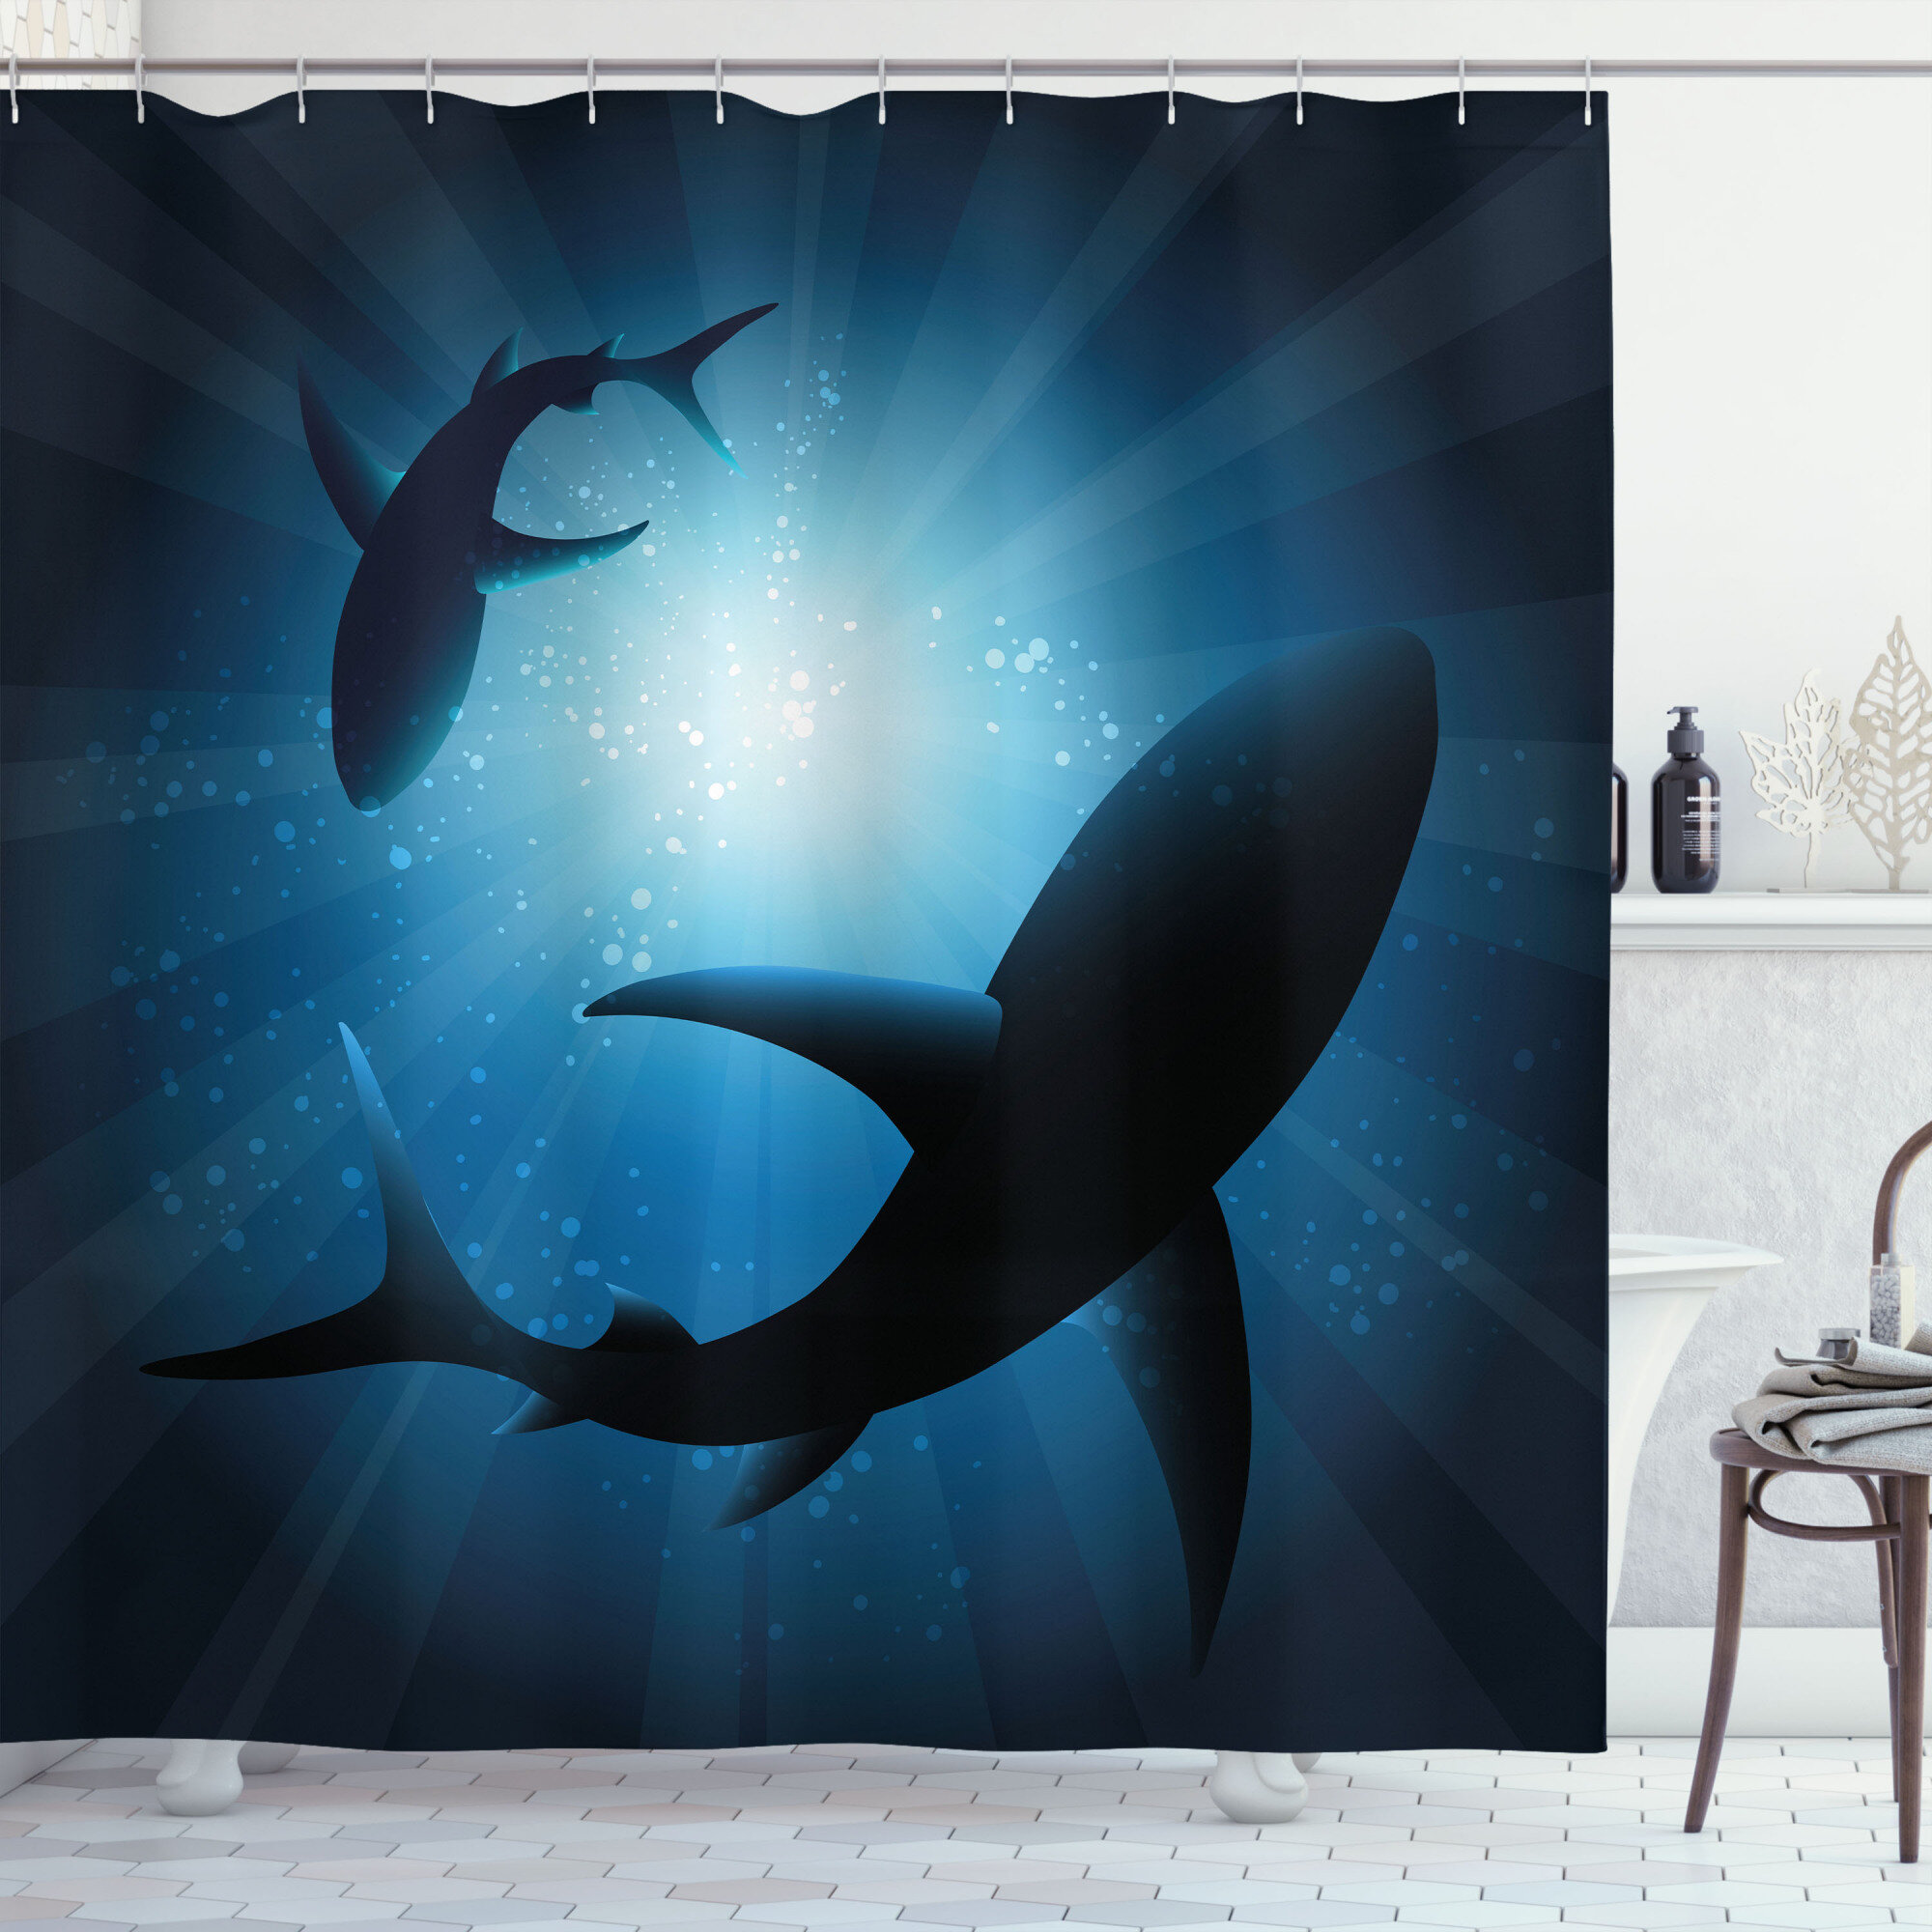 Shark Shower Curtain Set + Hooks East Urban Home Size: 70 H x 69 W